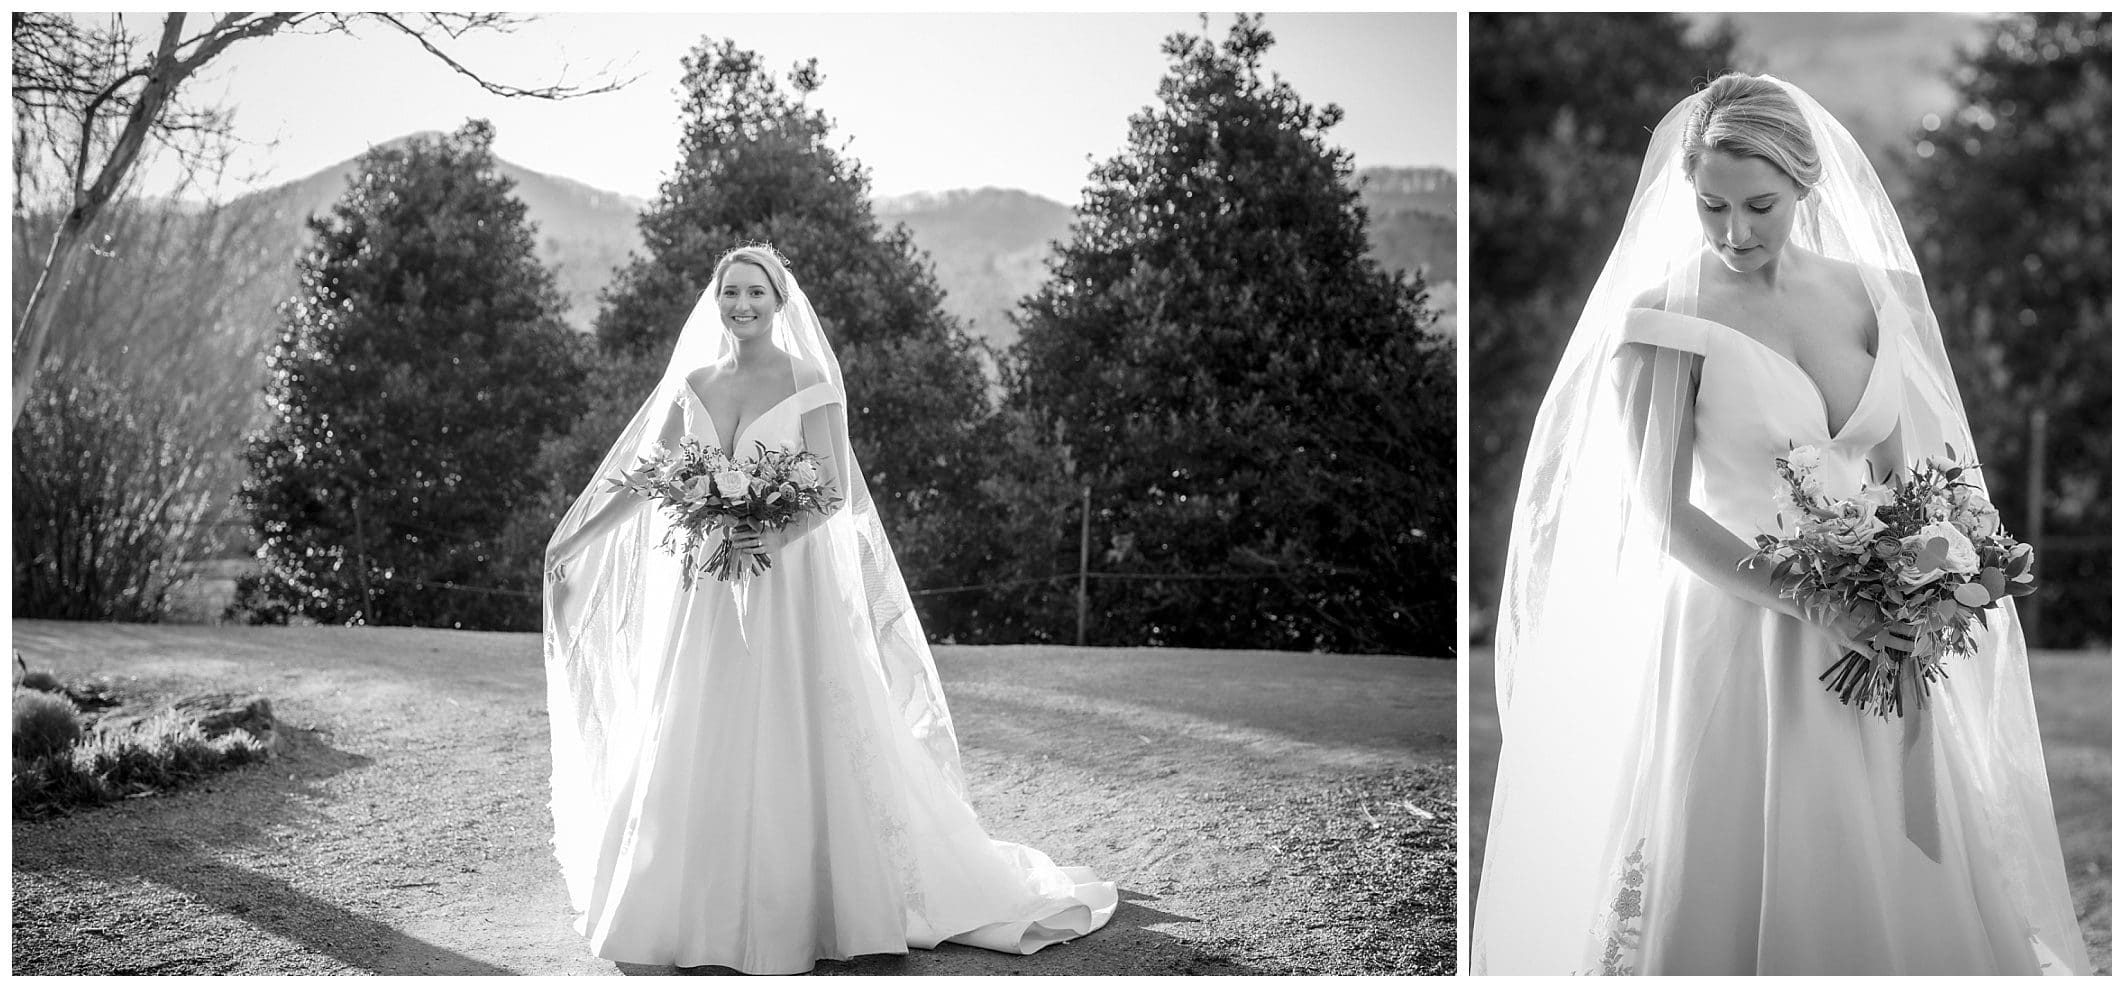 Golden light shines through bride's long flowing veil during bridal photos 